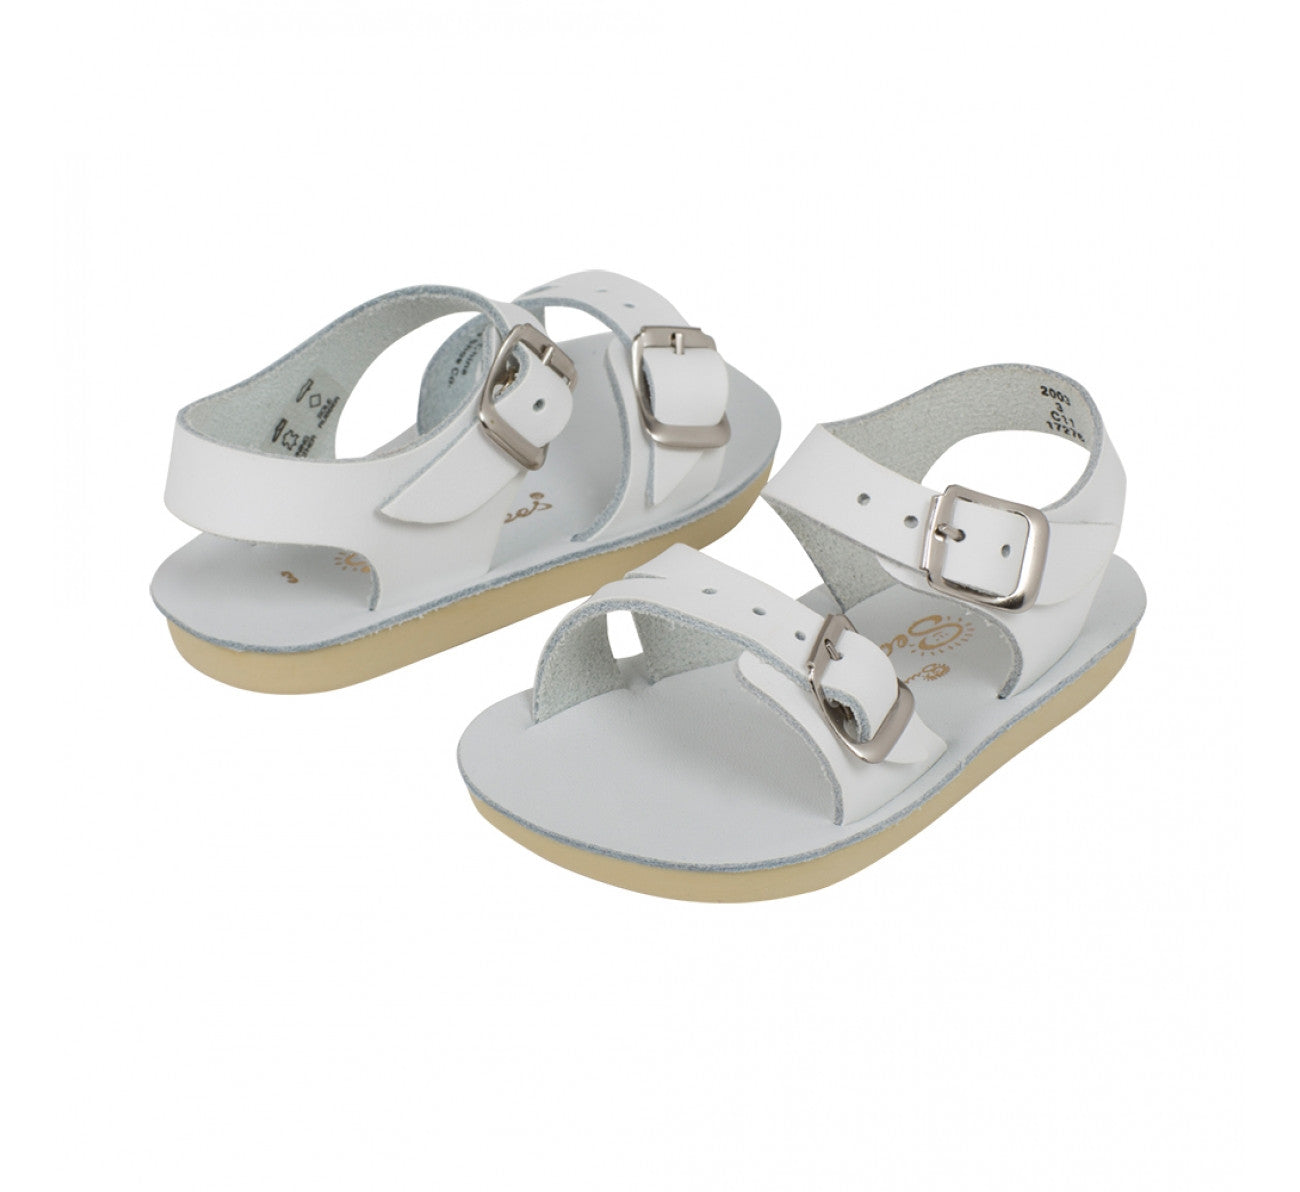 Sun-San Sea Wees Sandals | Style# 2003 White